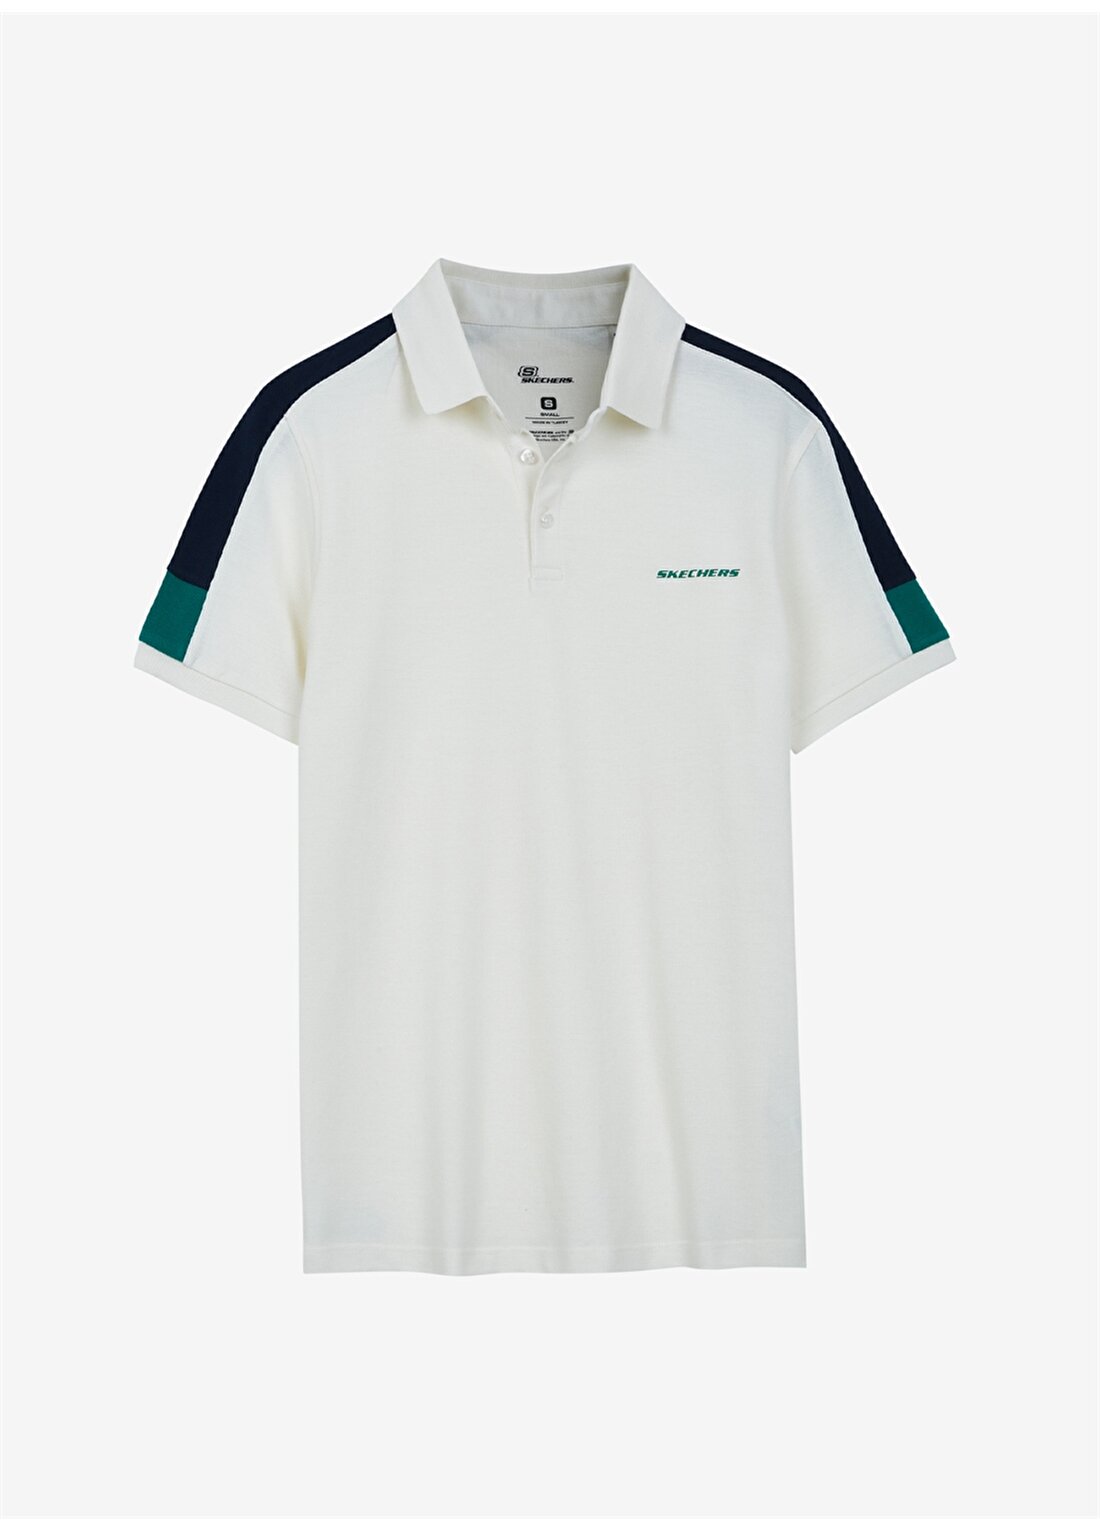 Skechers Düz Kırık Beyaz Erkek Polo T-Shirt S221047-102 Colorblock Polo T-Shirt